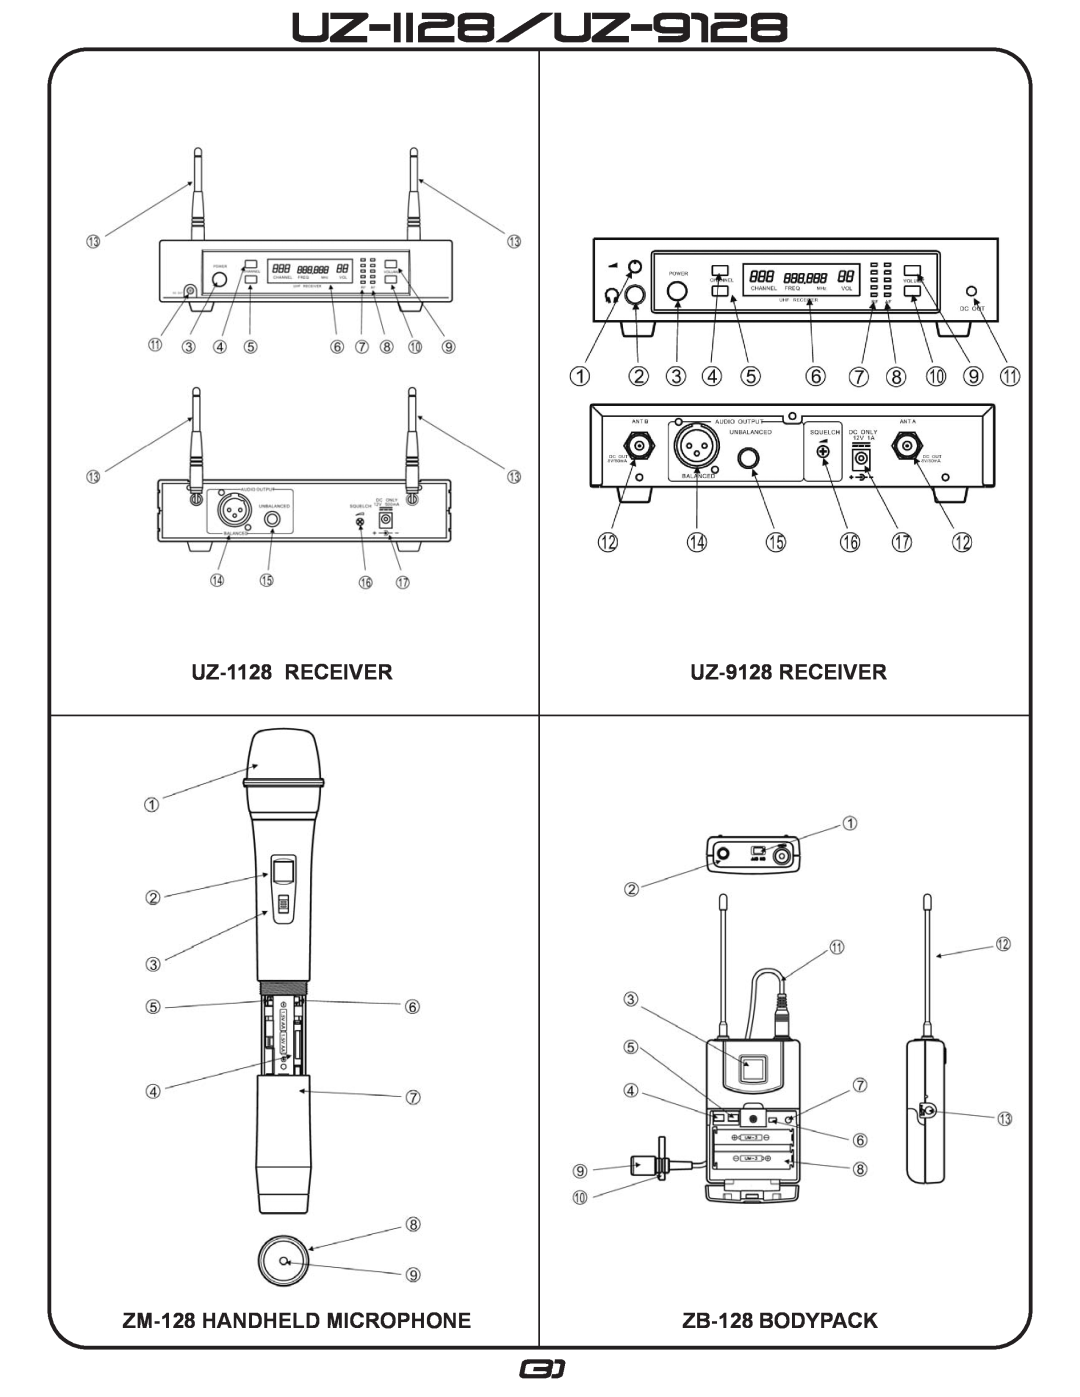 Gemini manual UZ-ii28/UZ-9128, UZ-1128RECEIVER, UZ-9128RECEIVER, ZM-128HANDHELD MICROPHONE, ZB-128BODYPACK 